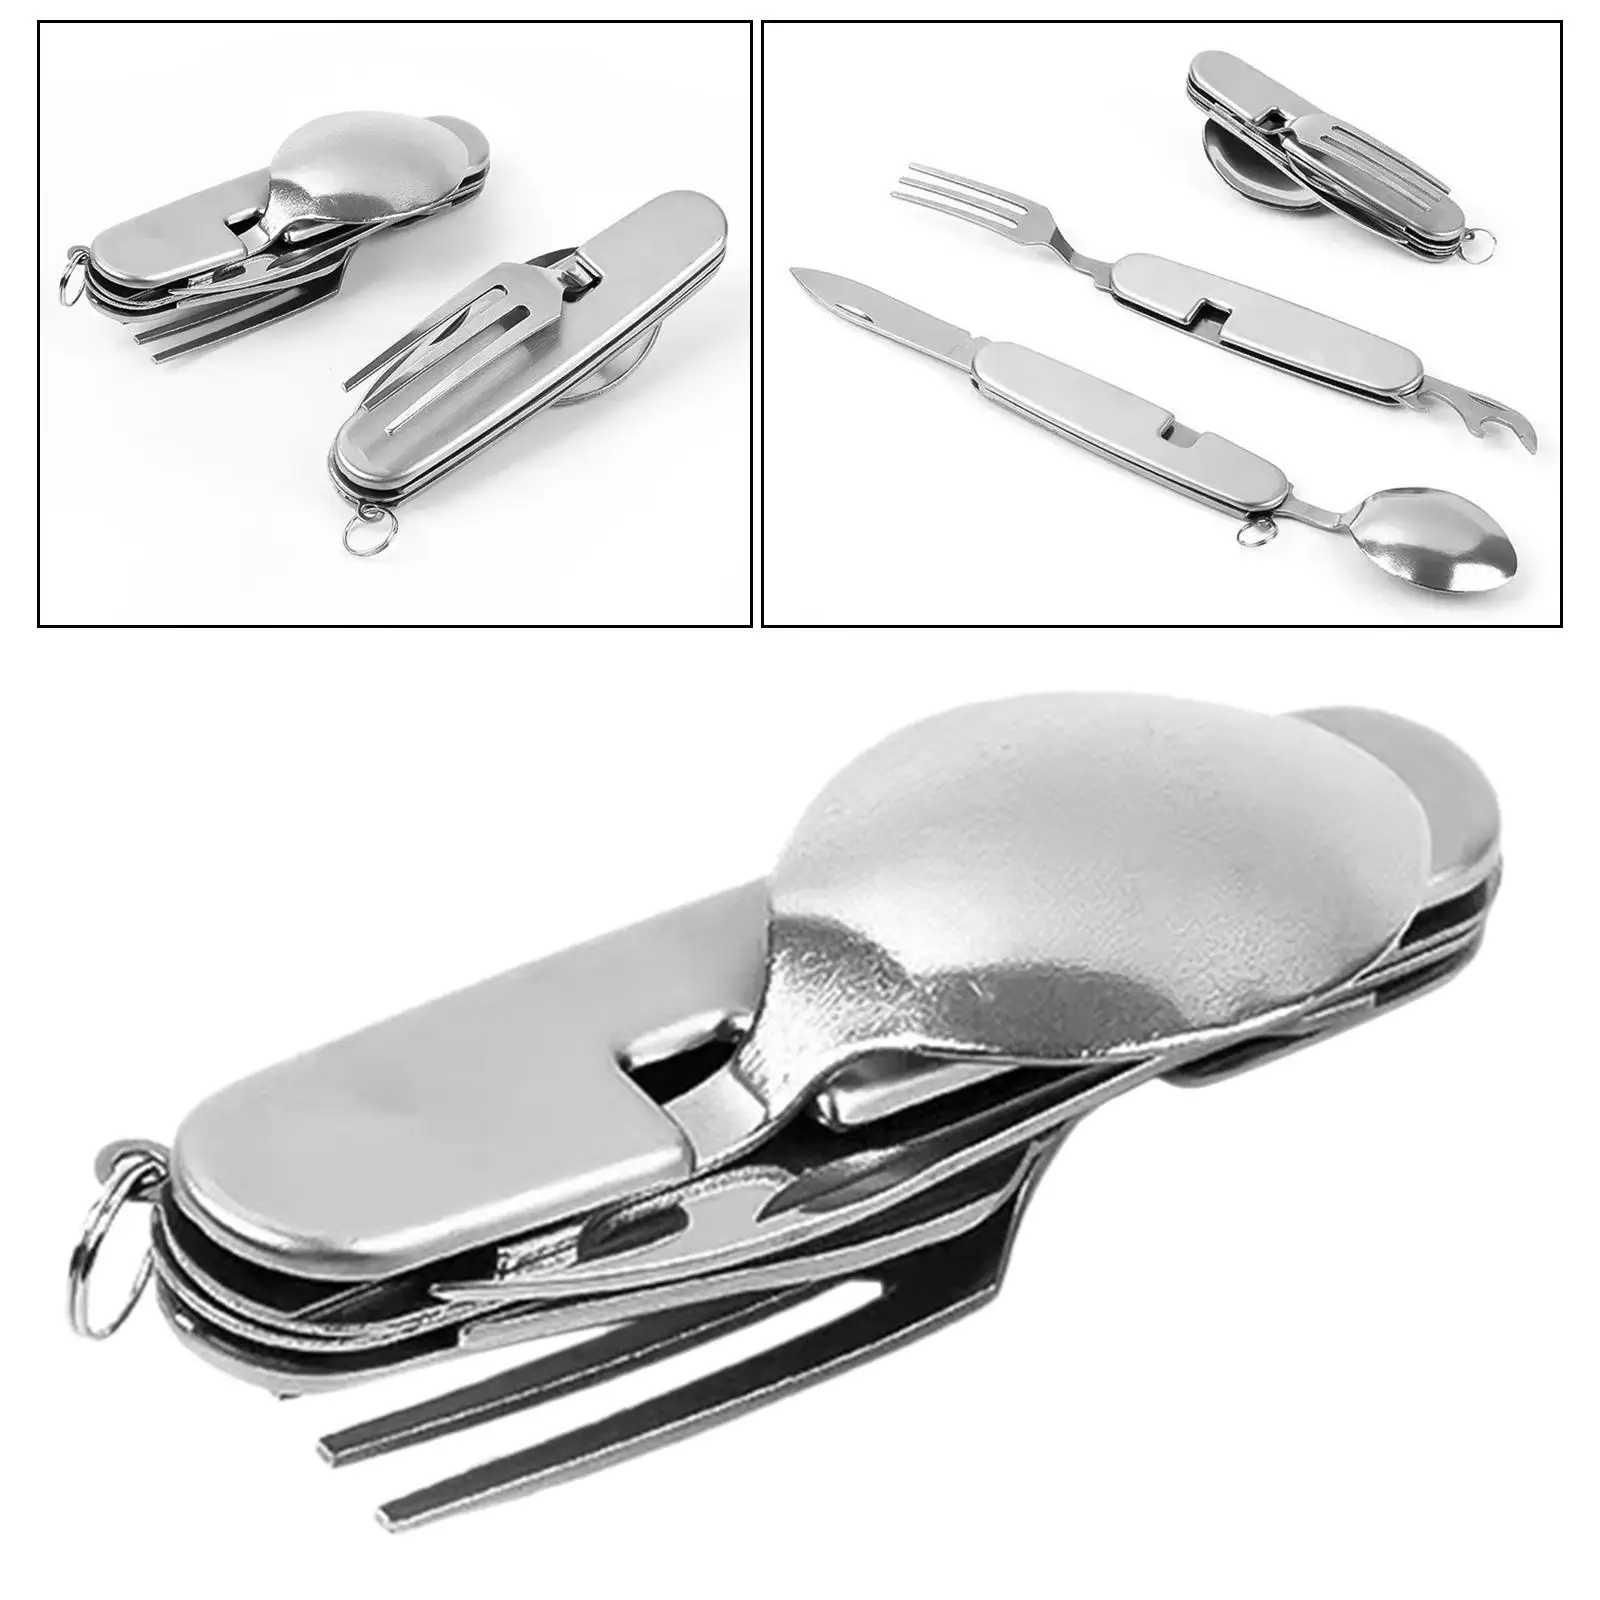 5 in 1 Camping Utensils Foldable Flatware Cookware Dinnerware Camping Cutlery